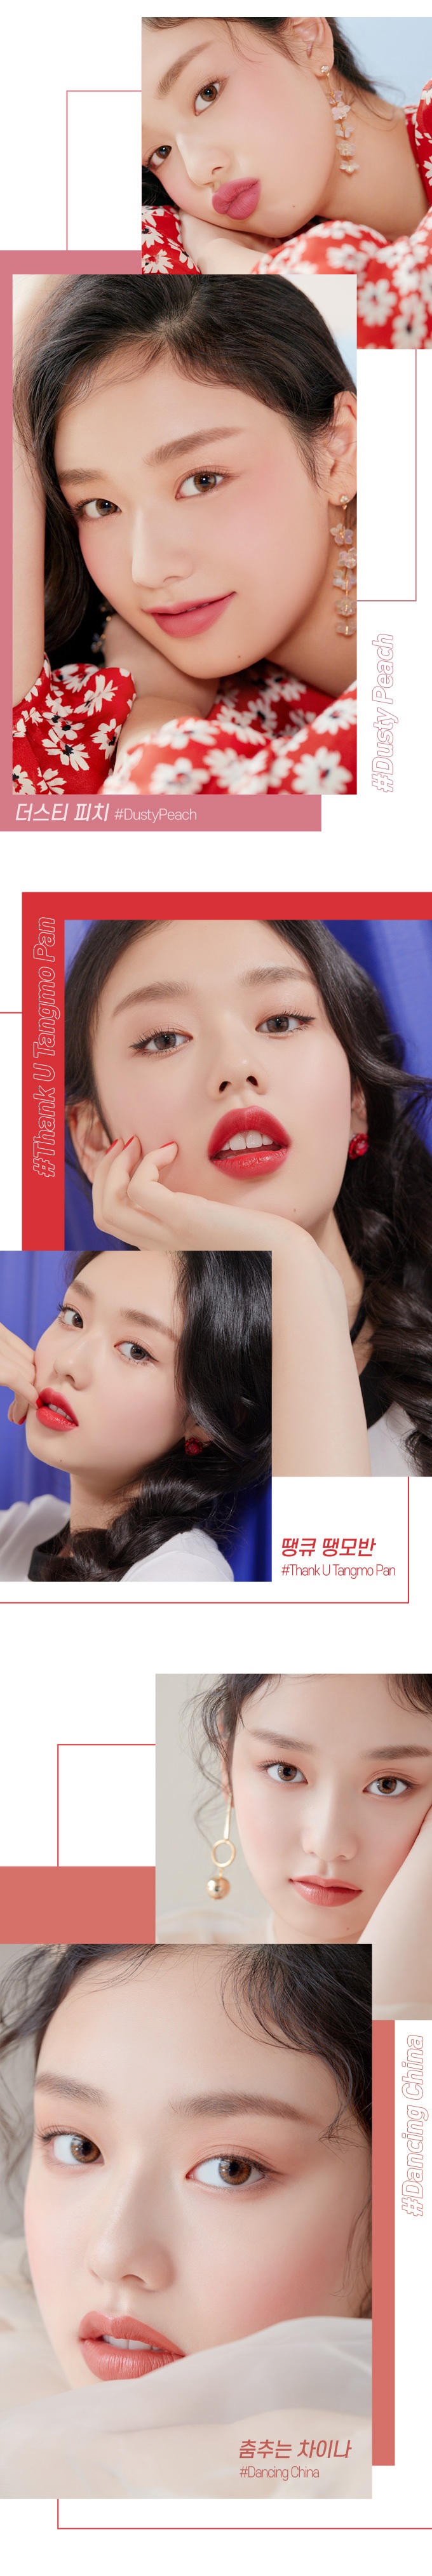 Etude House Better Lips Talk Velvet korean skincare product online shop malaysia China taiwan2